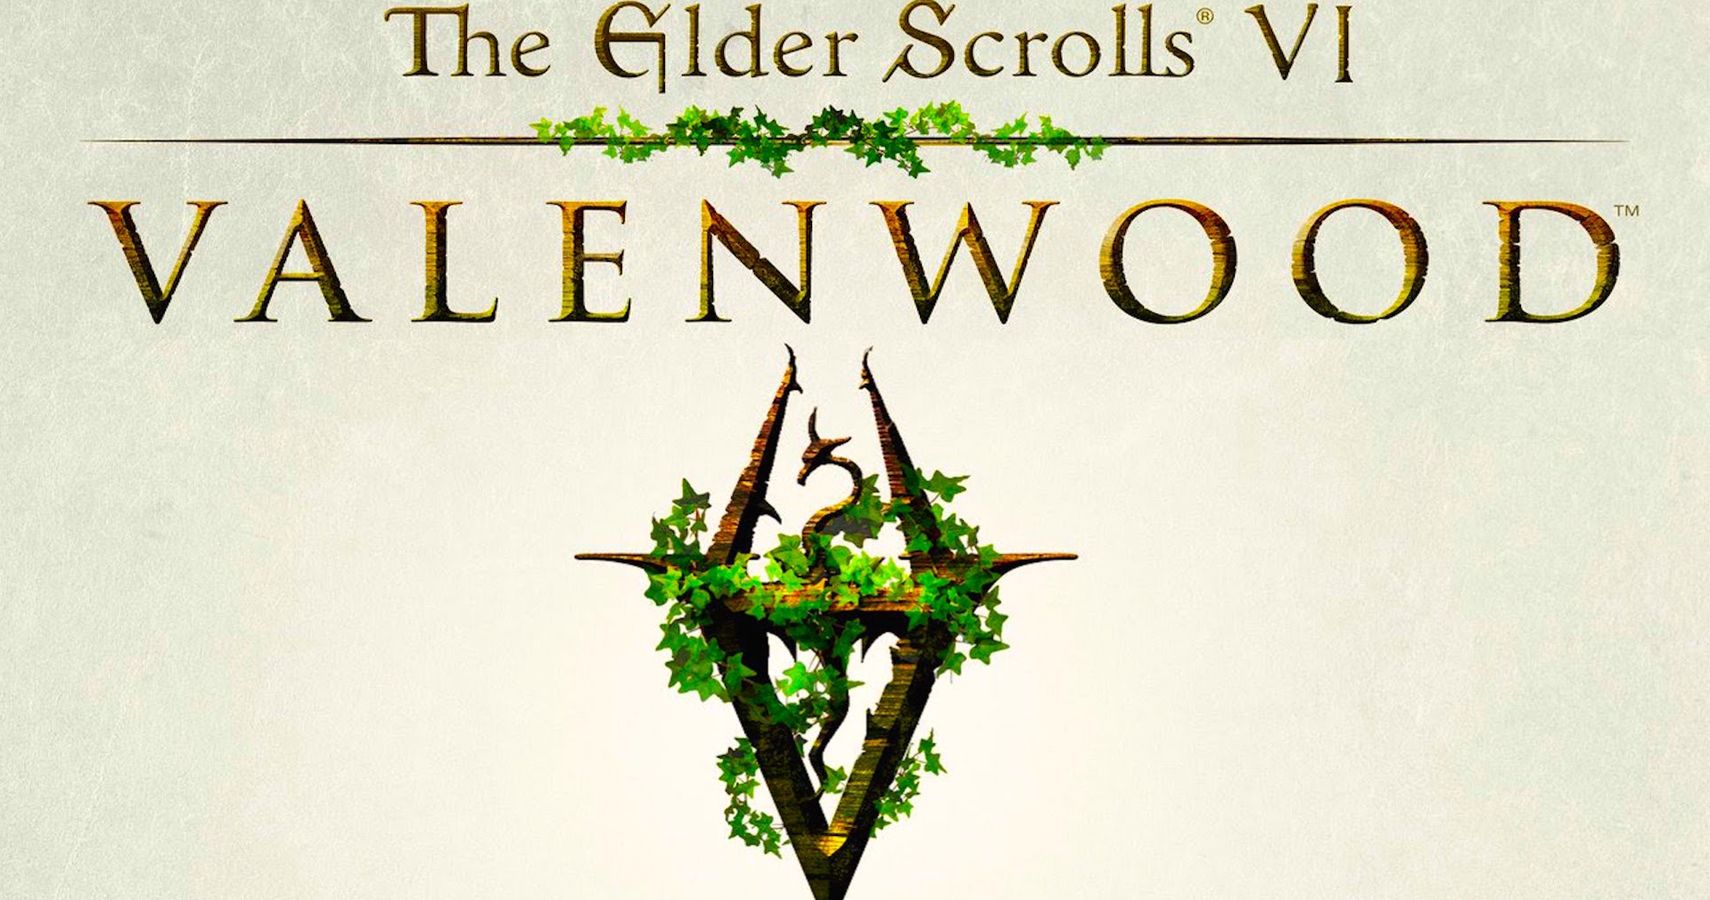 The Elder Scrolls 6 will have Skyrim's progression system